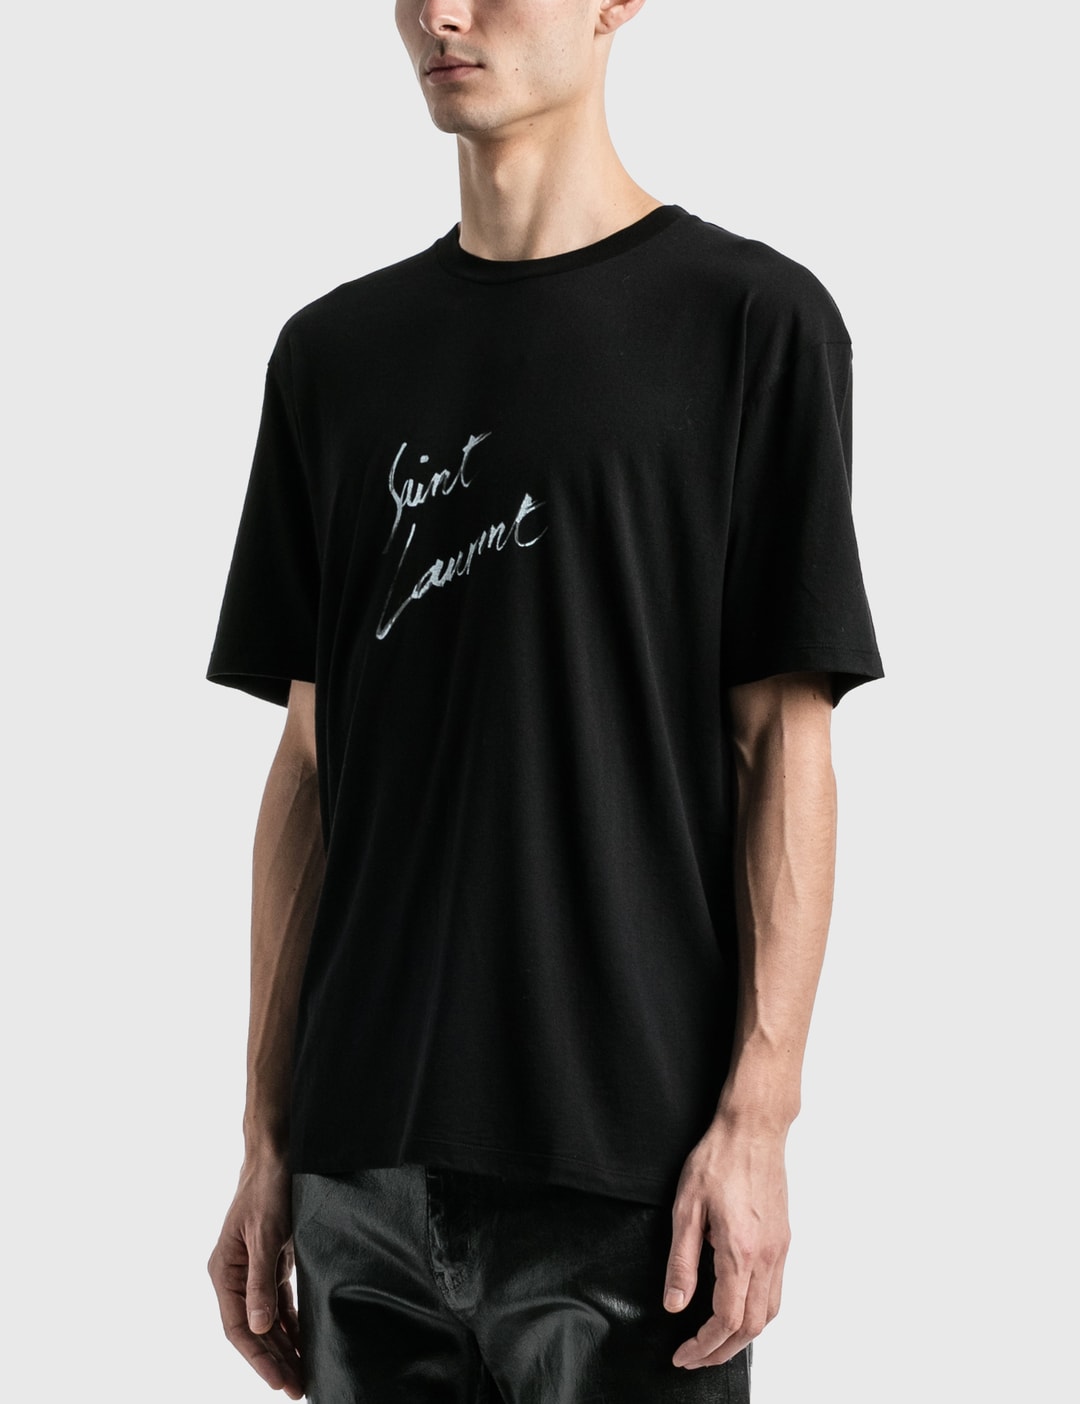 Saint Laurent Saint Laurent Signature T-Shirt | HBX - Globally Fashion and Lifestyle by Hypebeast